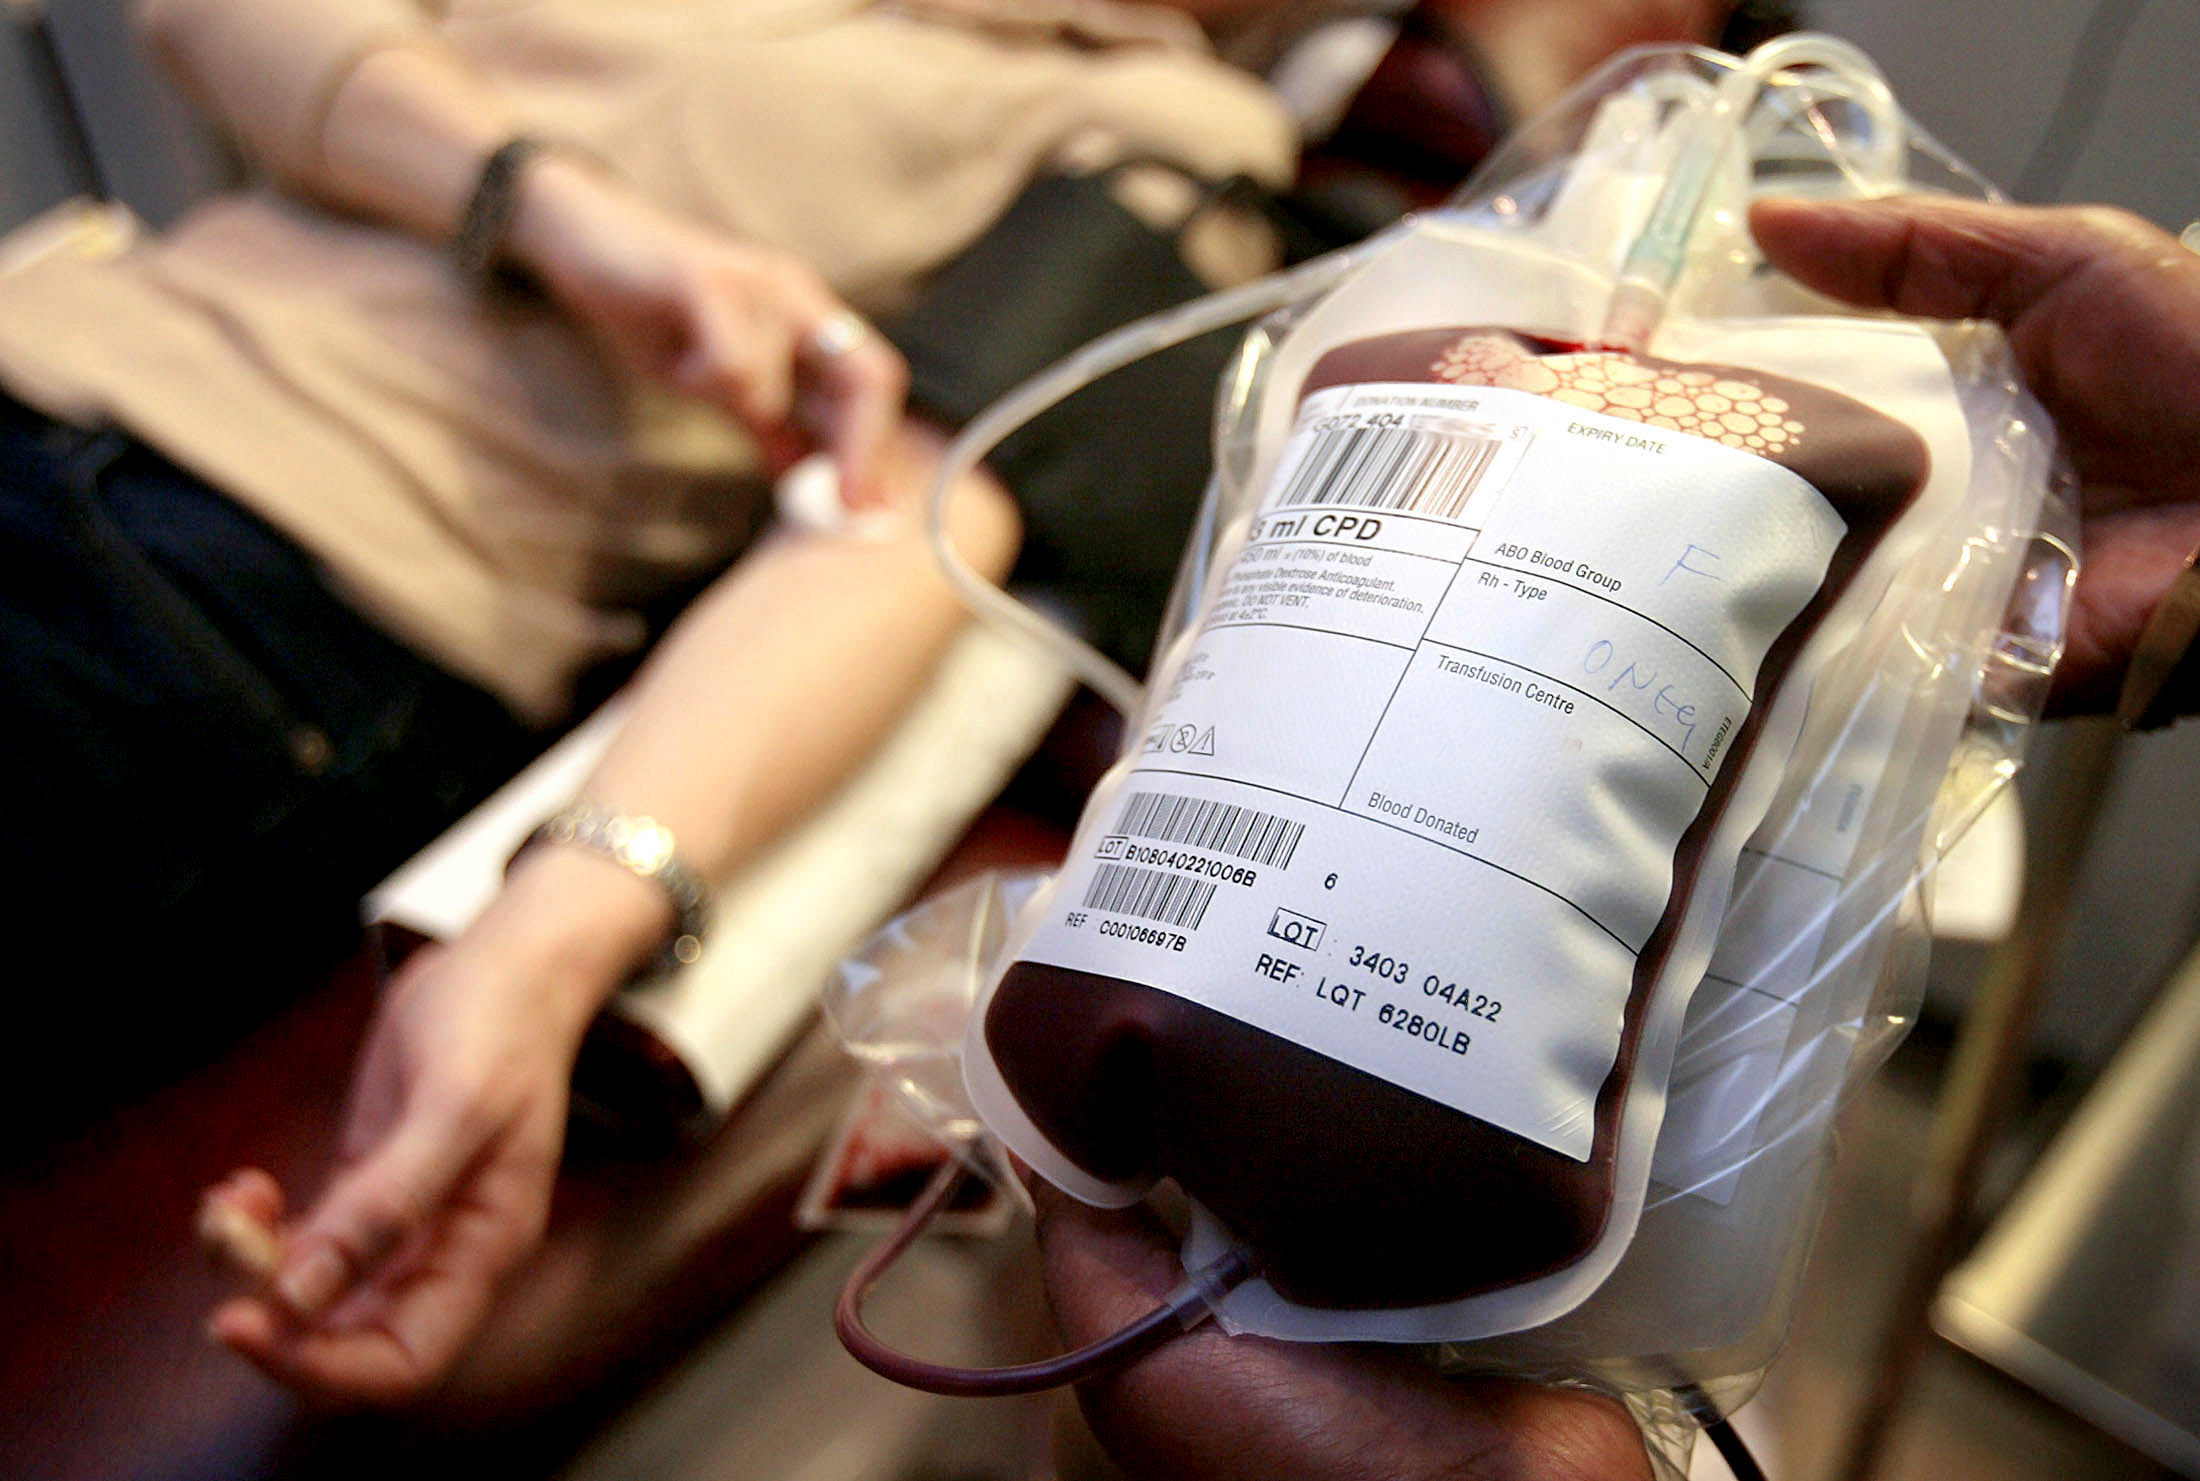 Переливание крови спасло жизнь. Процесс переливания крови. Непрямое переливание крови.